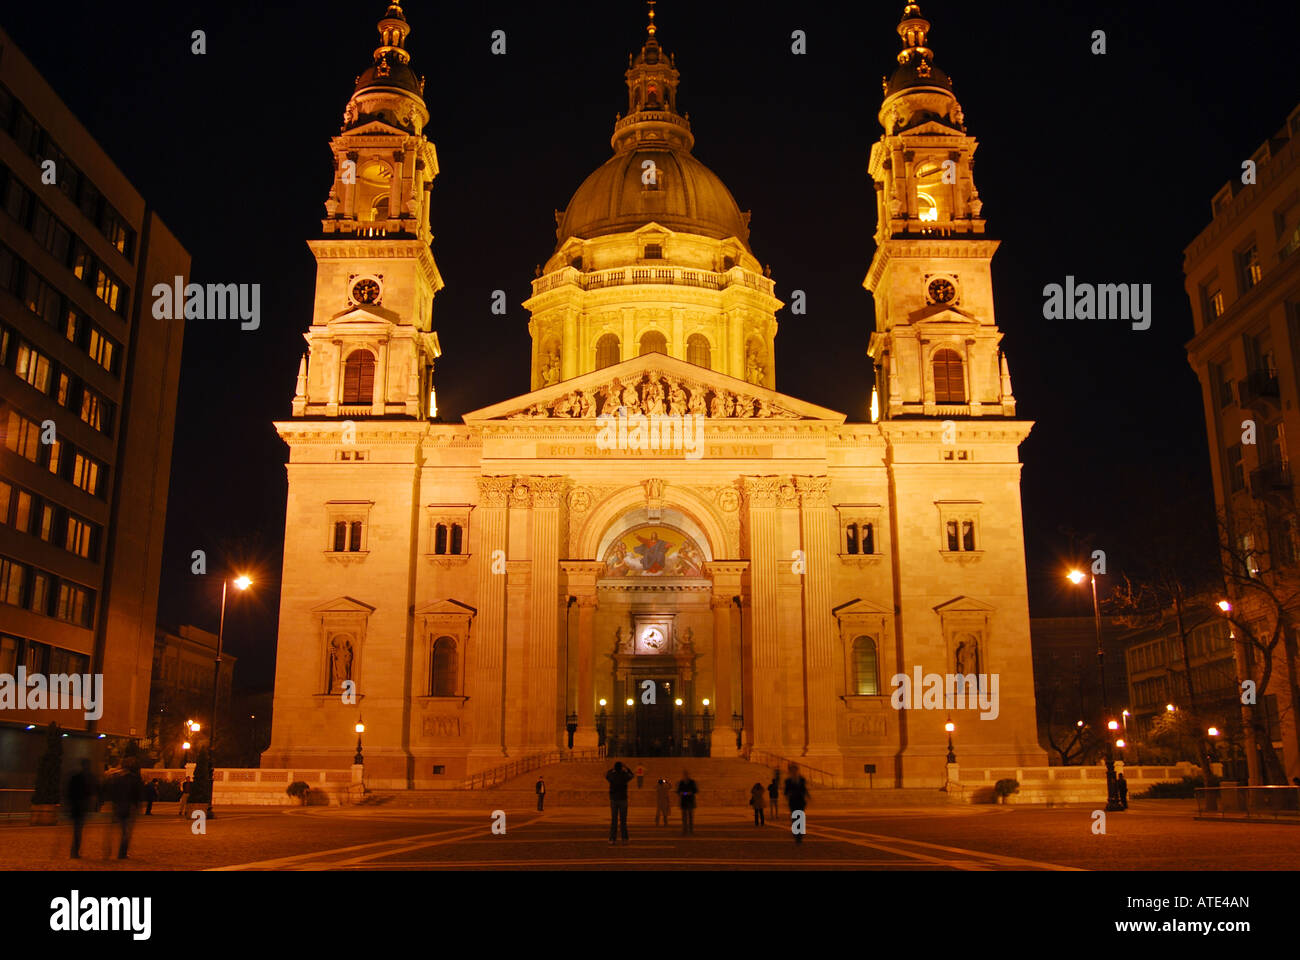 St.Stephen's Basilica at night, Pest, Budapest, Republic of Hungary Stock Photo